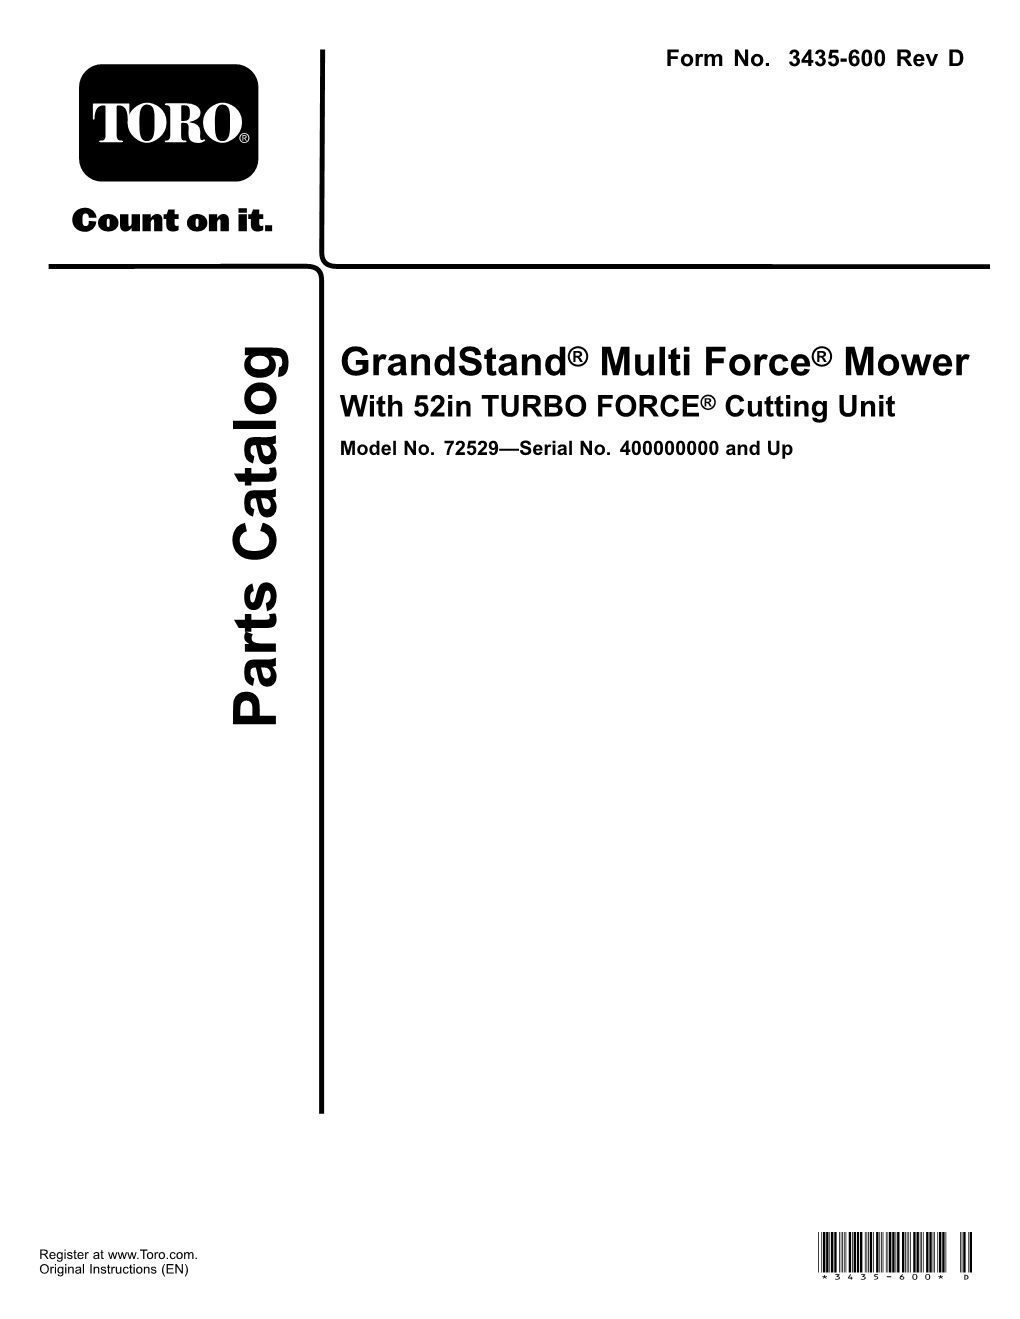 Grandstand® Multi Force ® Mower